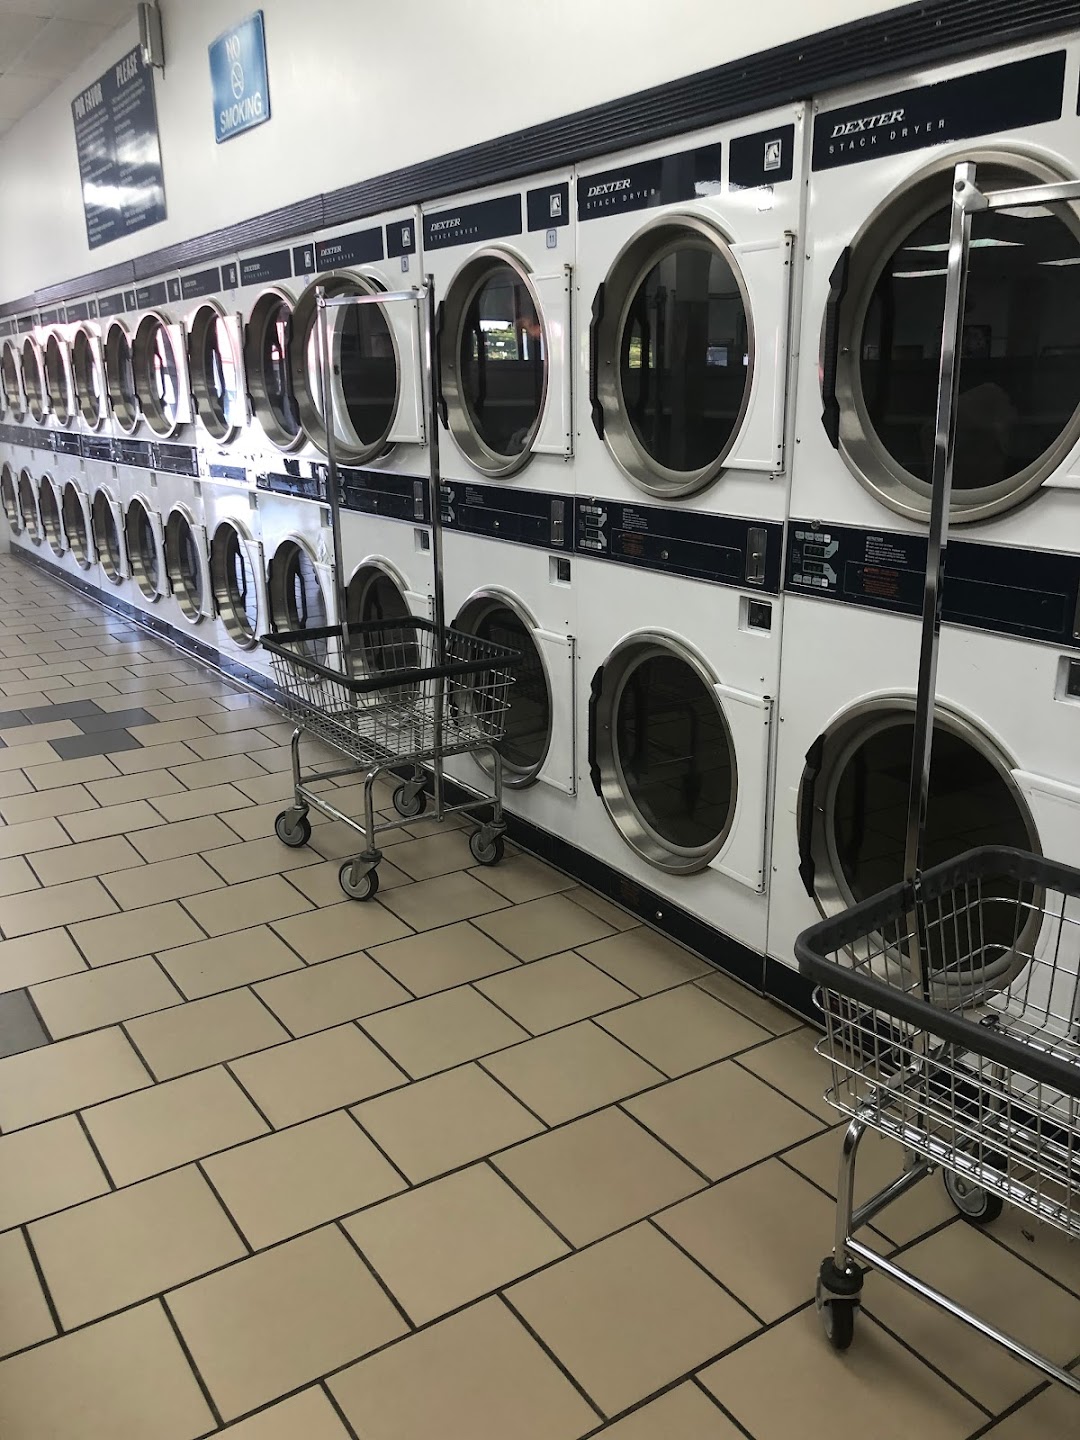 Corrales Laundromat